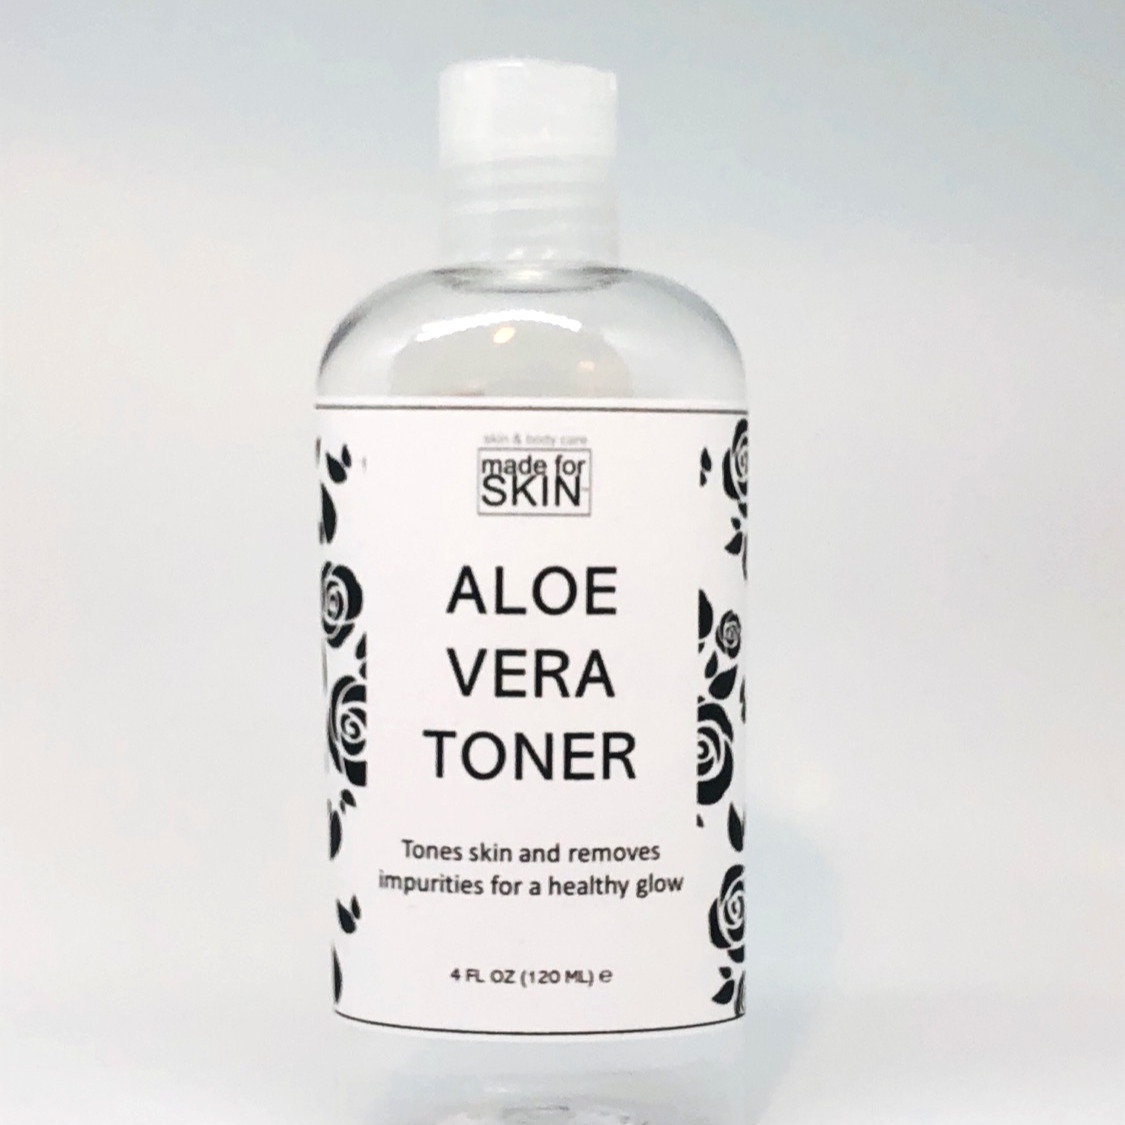 Made for Skin Aloe Vera Toner